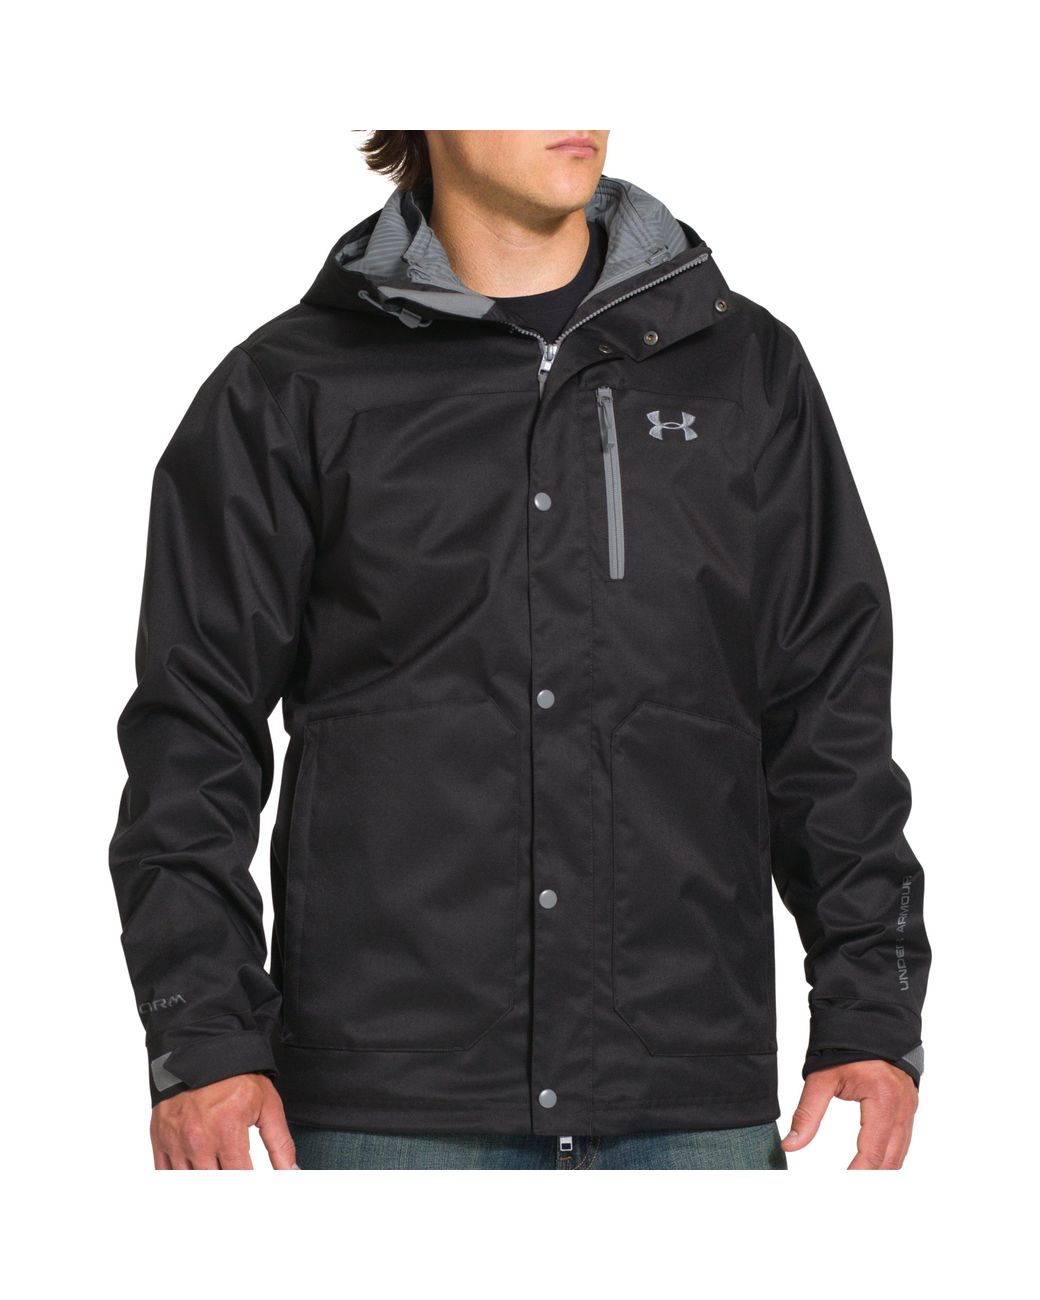 https://cdna.lystit.com/1040/1300/n/photos/underarmour/edcd9019/under-armour-Black-Mens-Ua-Storm-Coldgear-Infrared-Porter-3-in-1-Jacket.jpeg